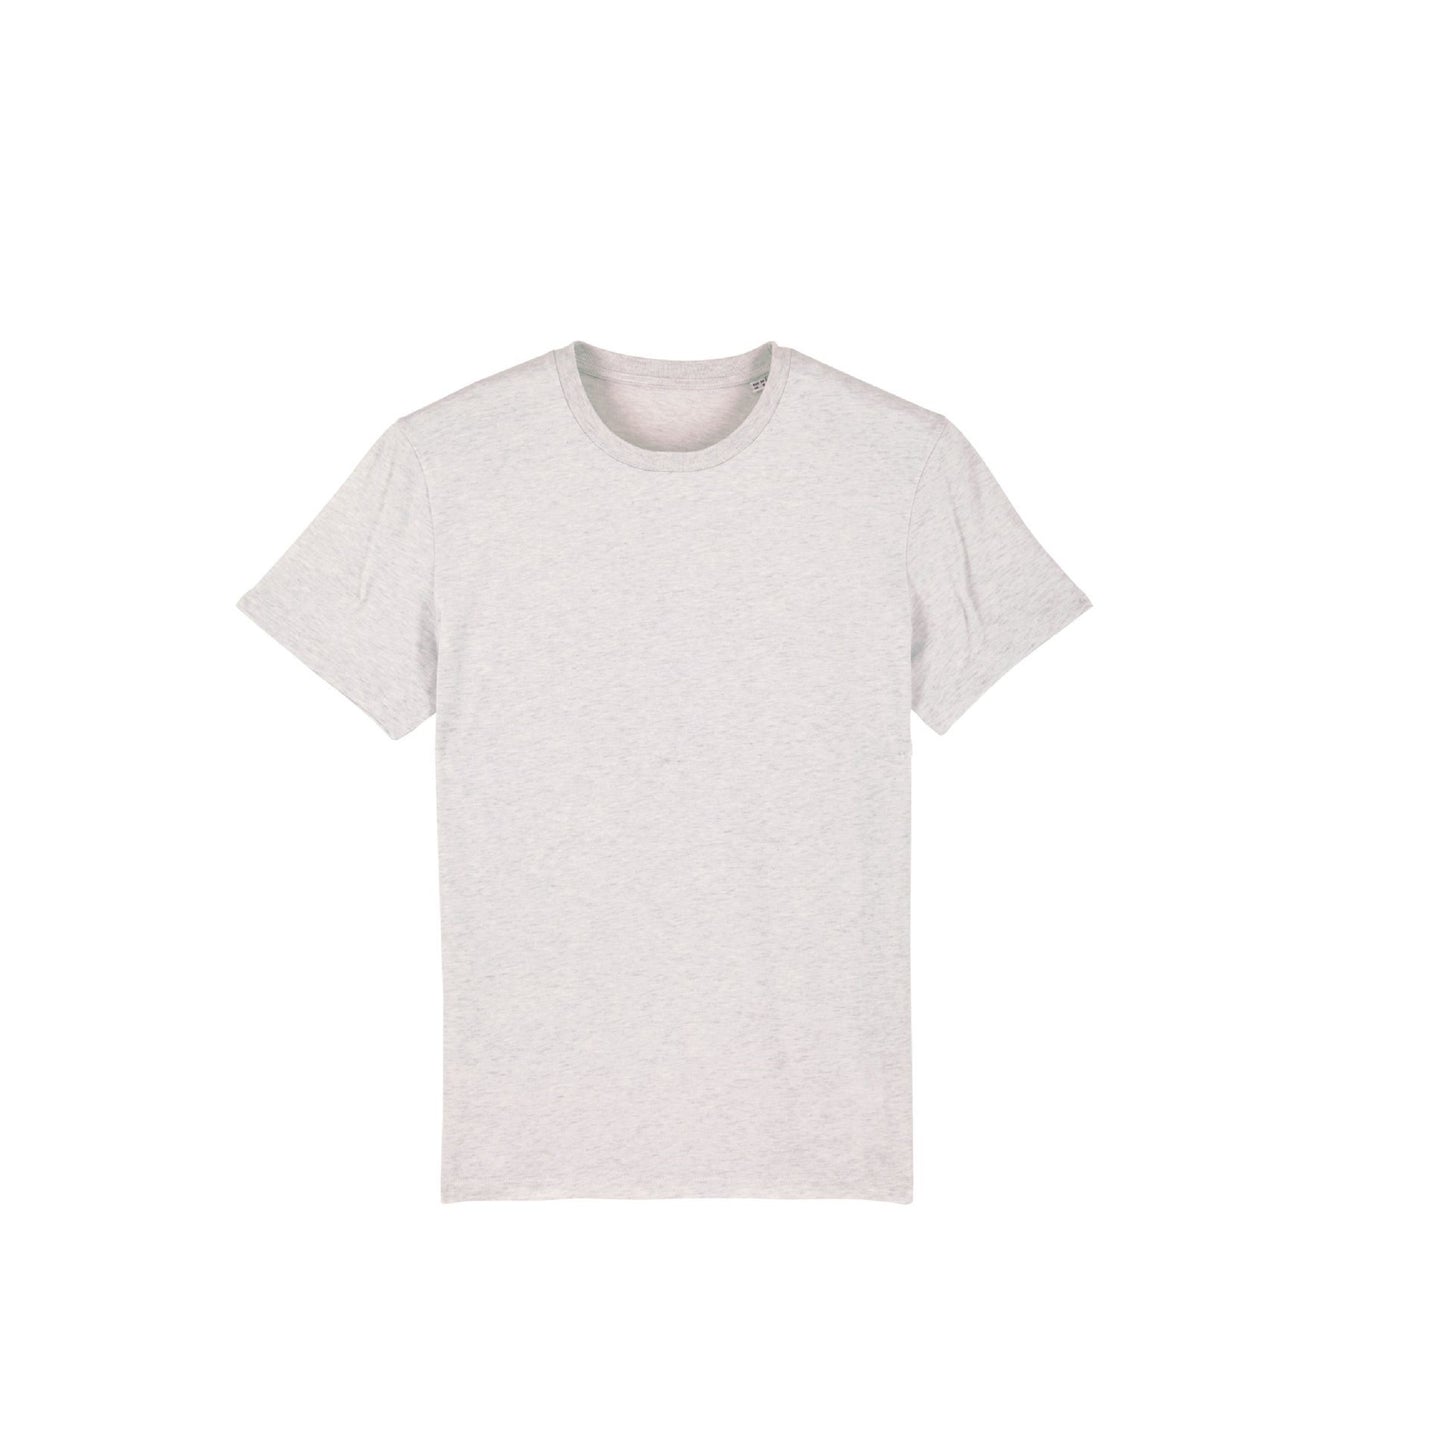 The Organic Cotton T-Shirt